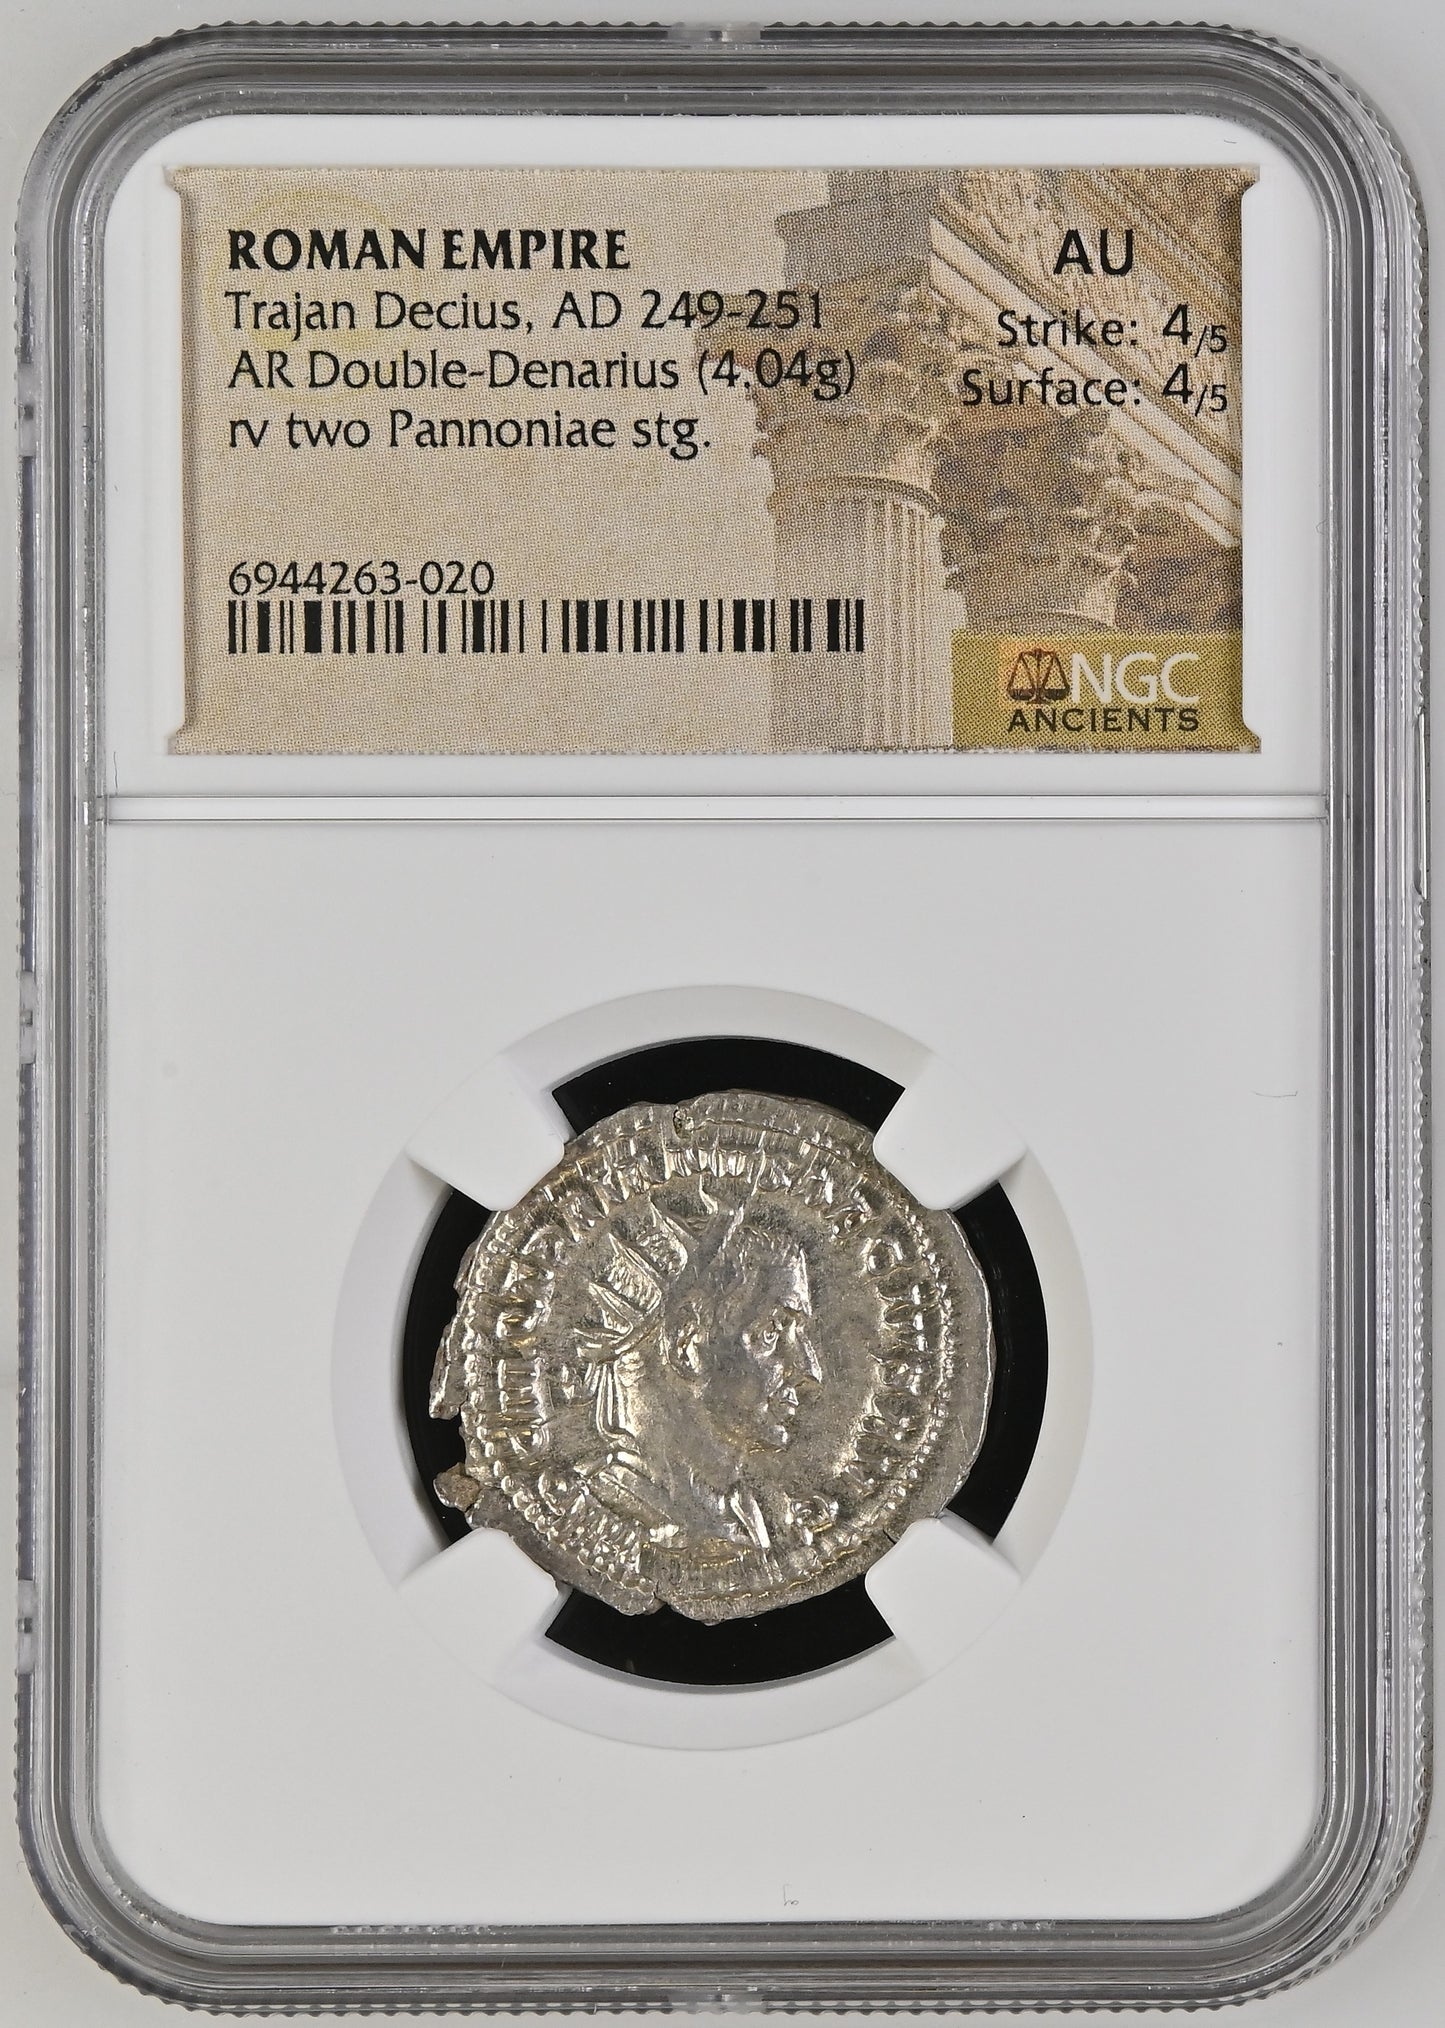 Roman Empire - Trajan Decius - Silver Double-Denarius - NGC AU - RIC:21b